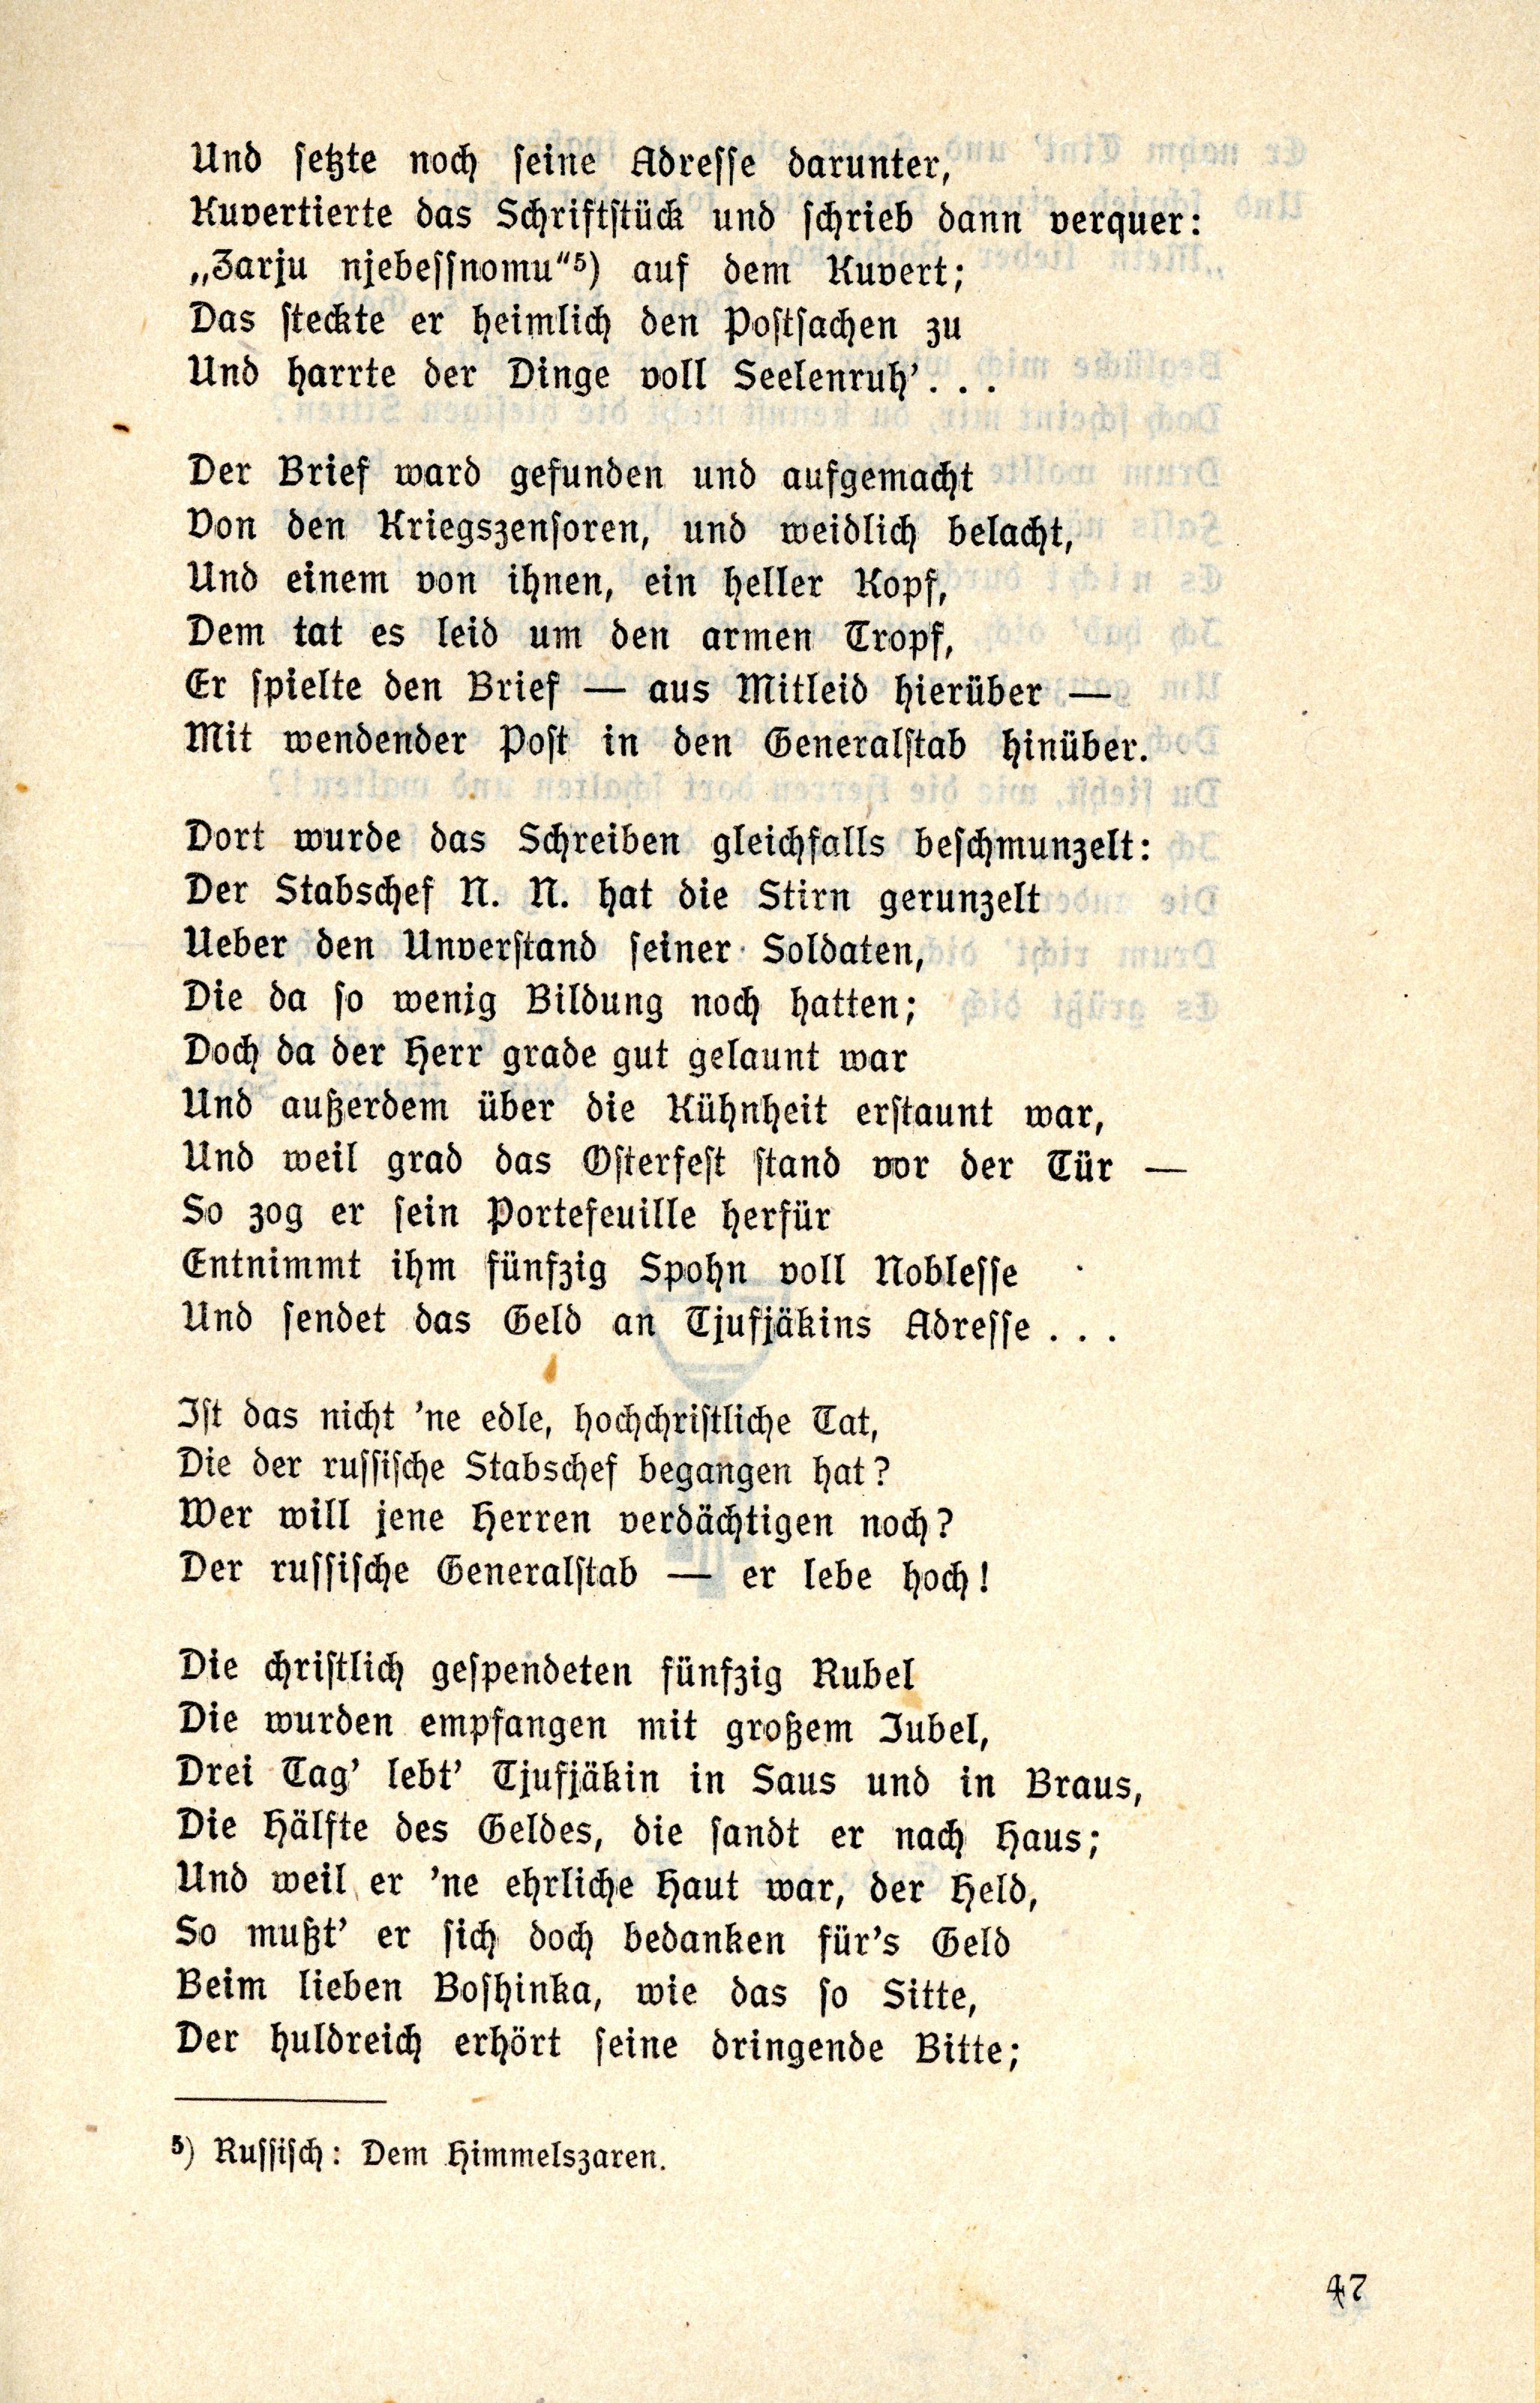 Der Balte im Maulkorb (1917) | 48. (47) Основной текст